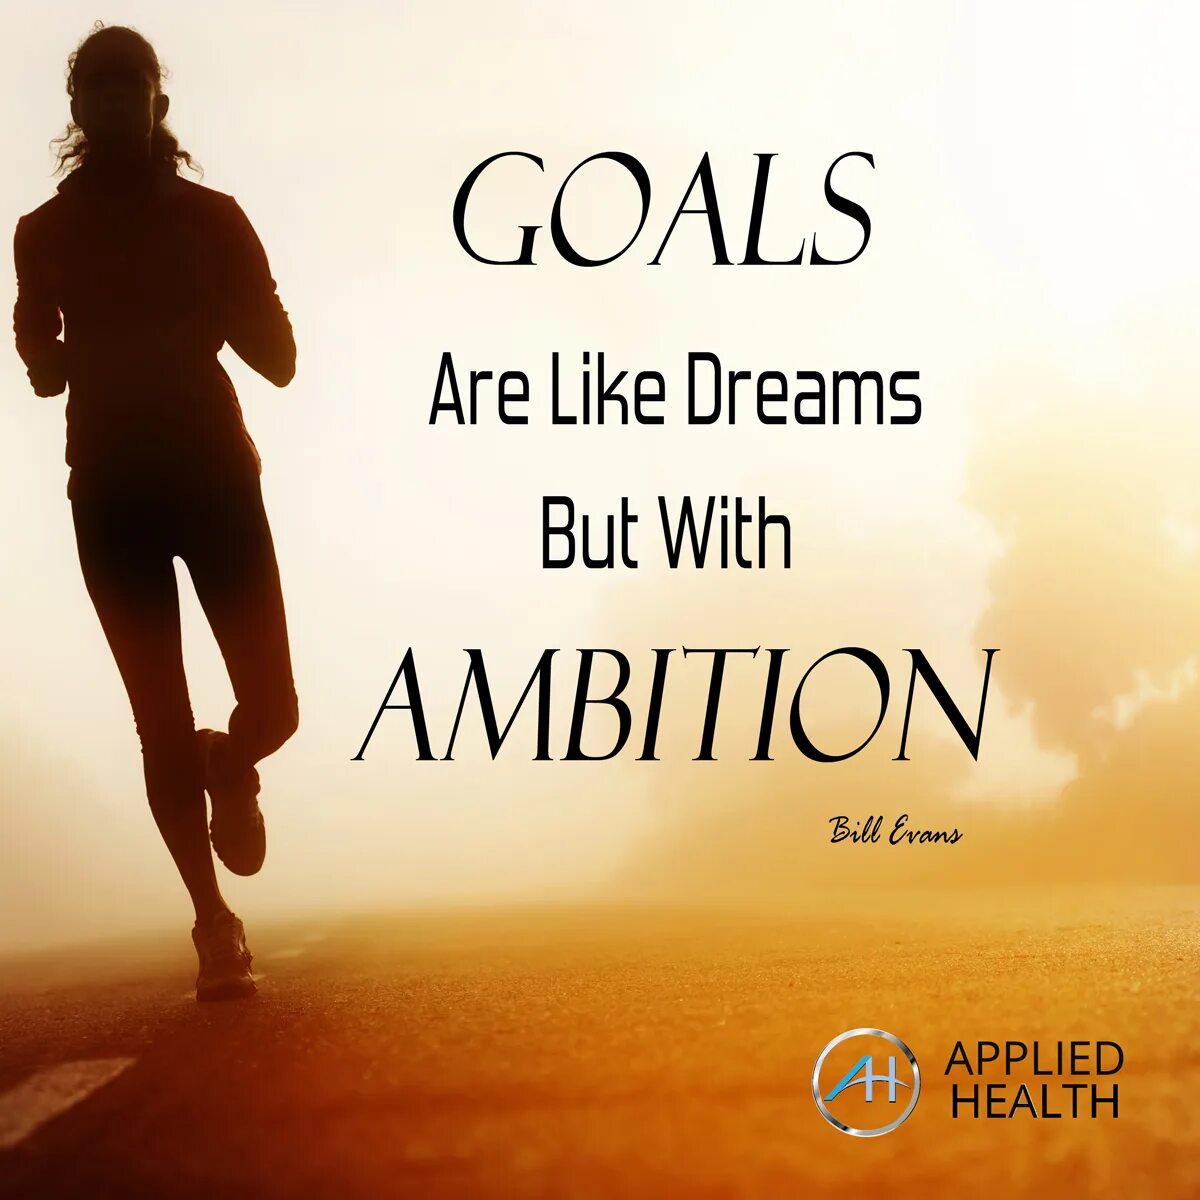 Life is but a dream. Ambitious goal. Ambition фотографии. Мотивация амбиции. Симпл мотивация.